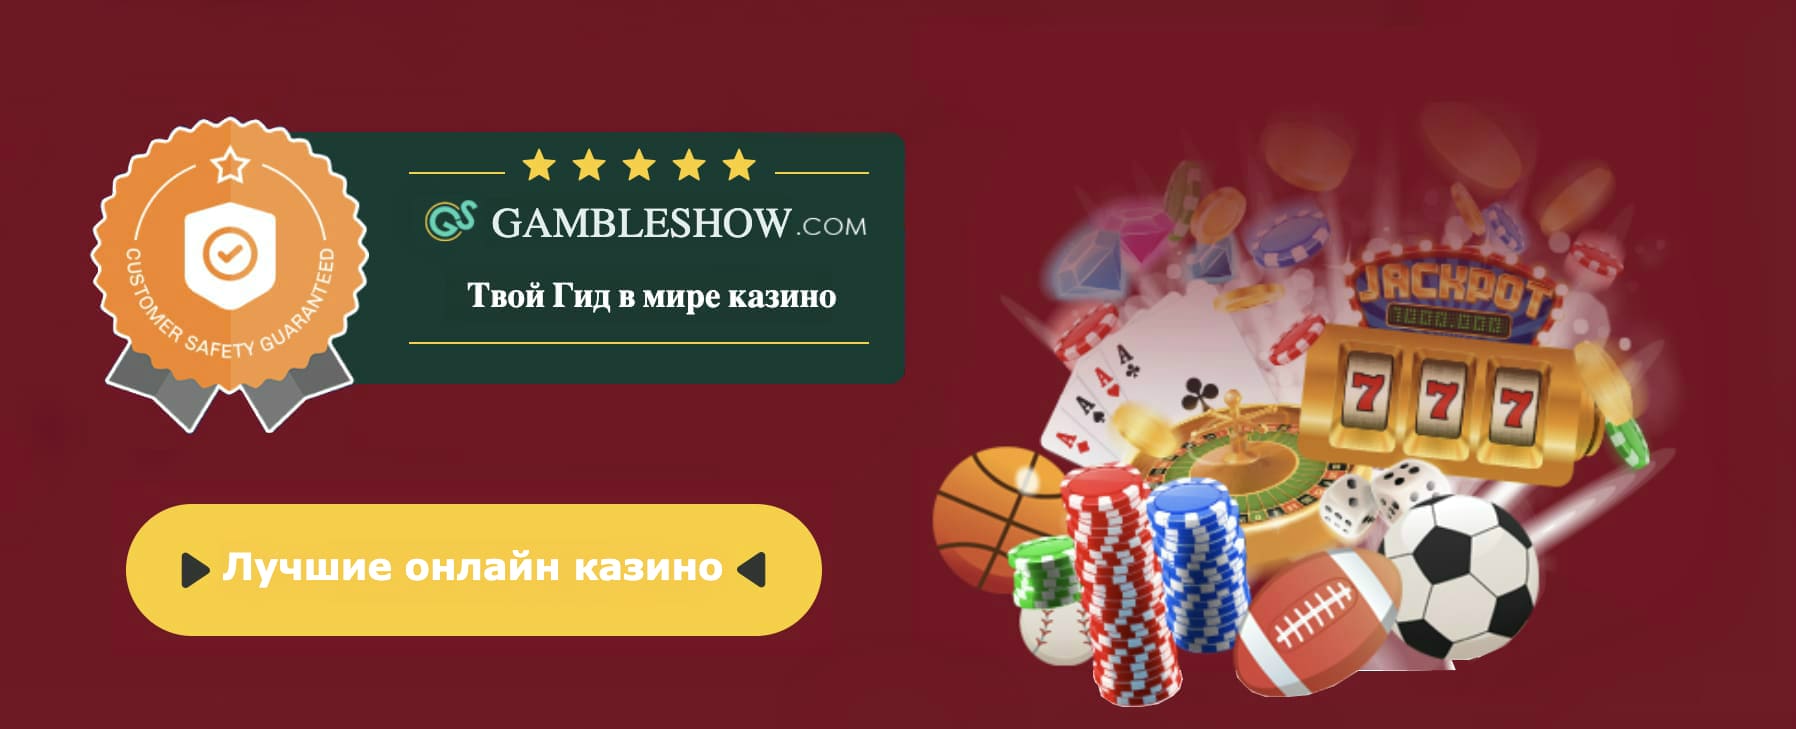 Online casino pa promo code